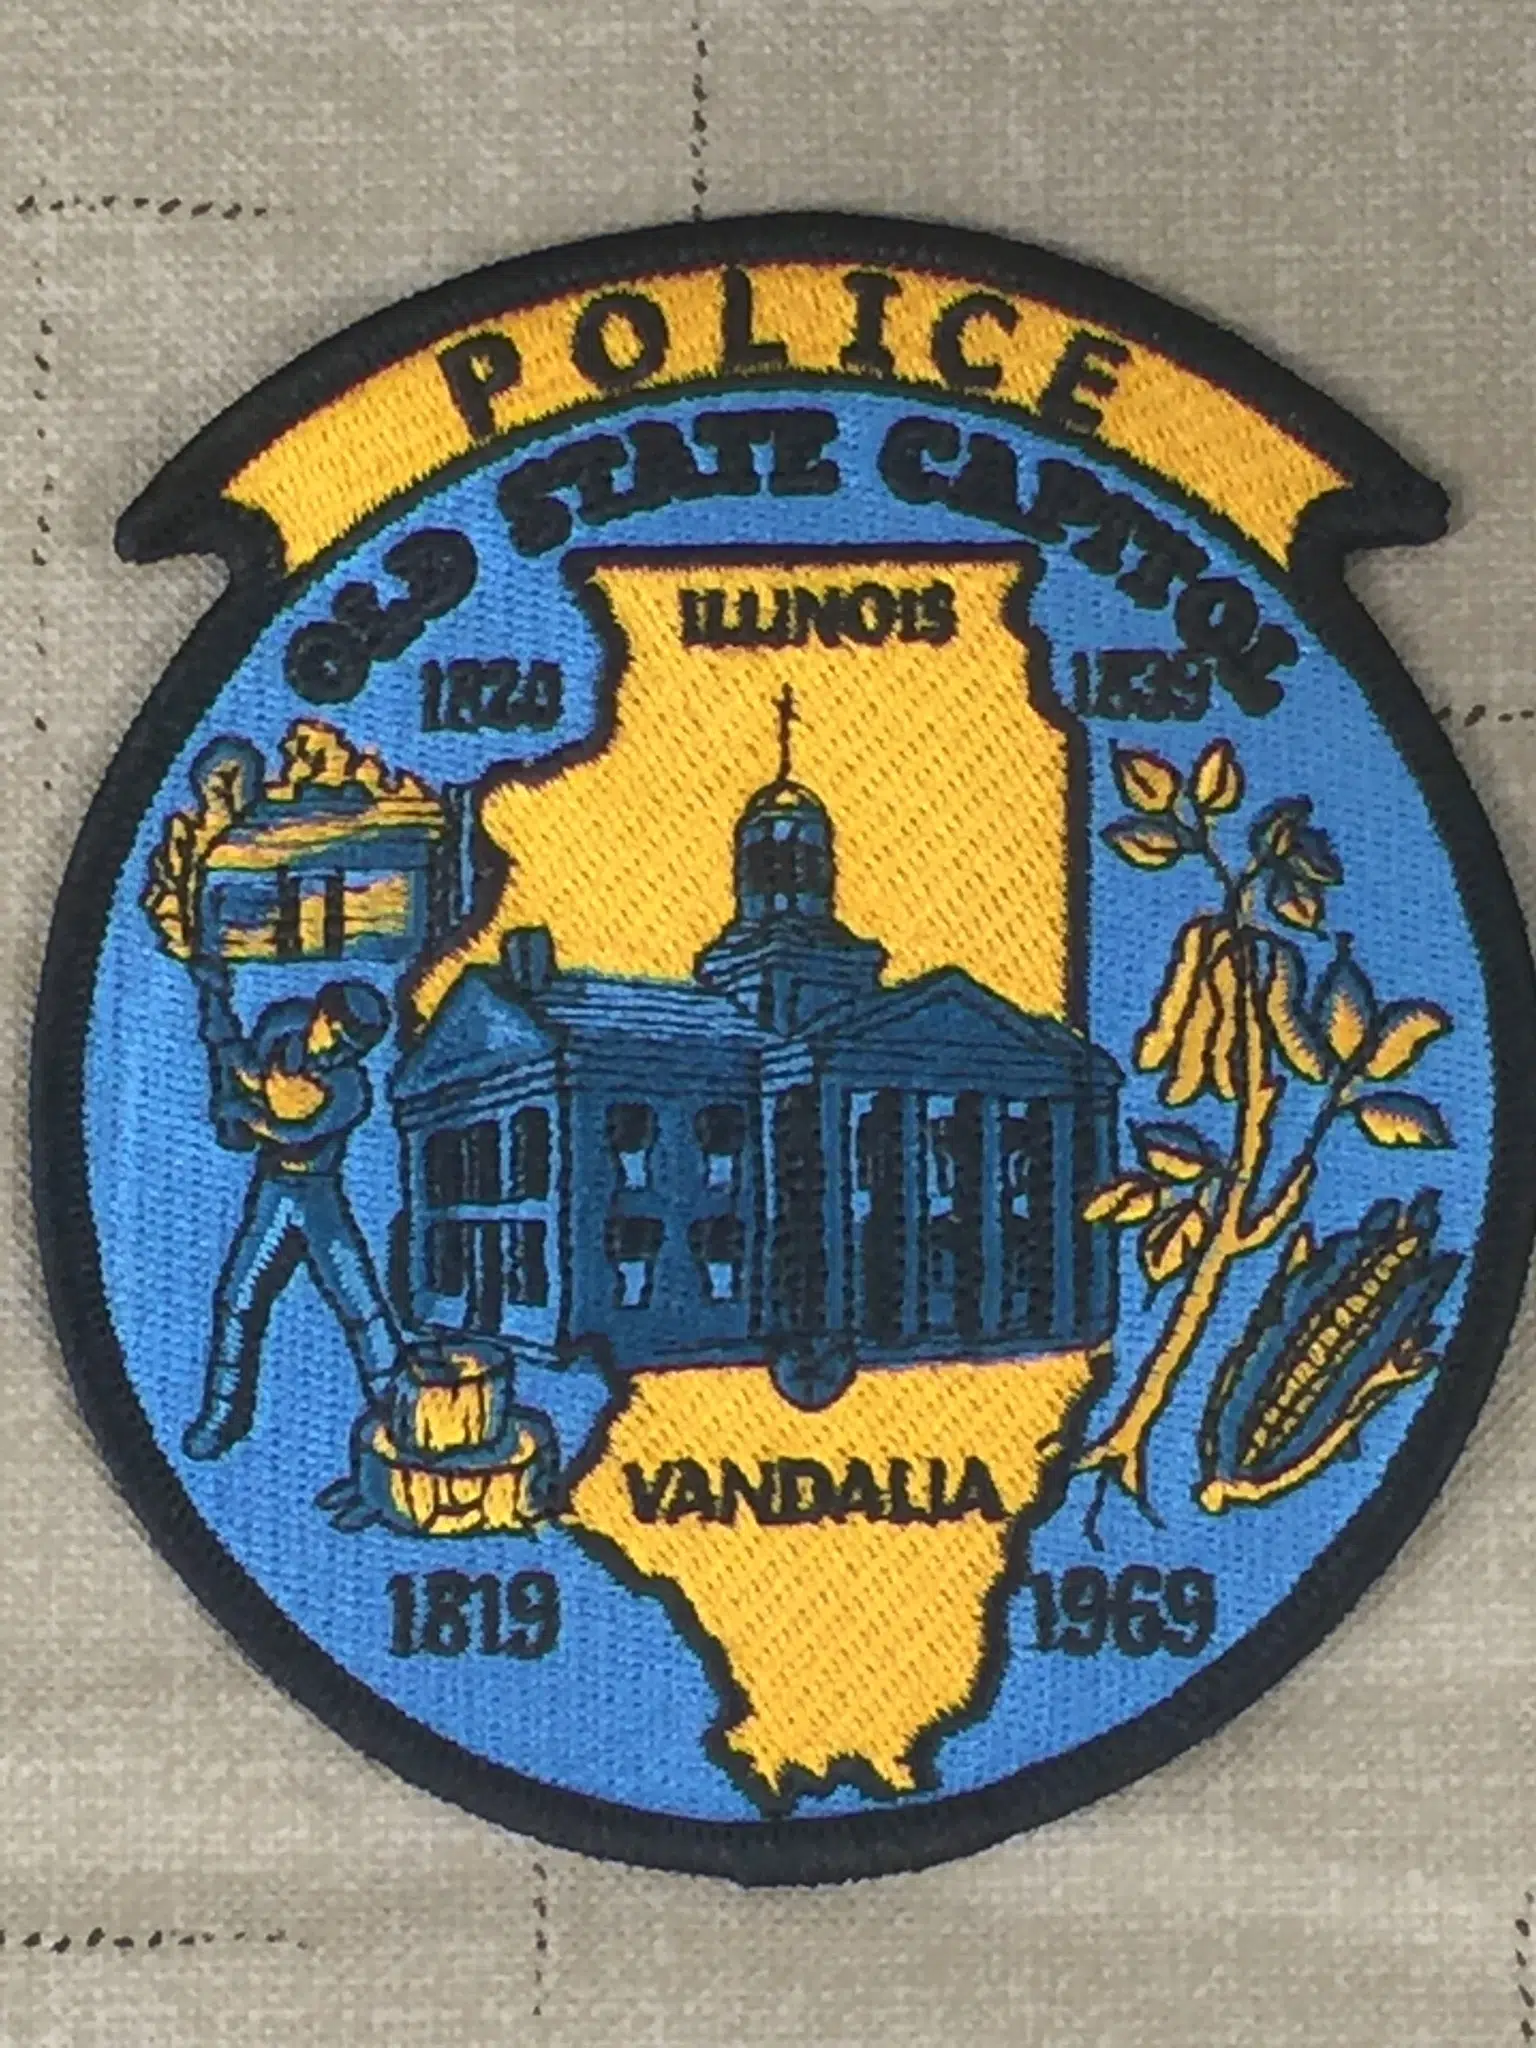 Vandalia PD handling several reports of burglary to vehicles on Thursday